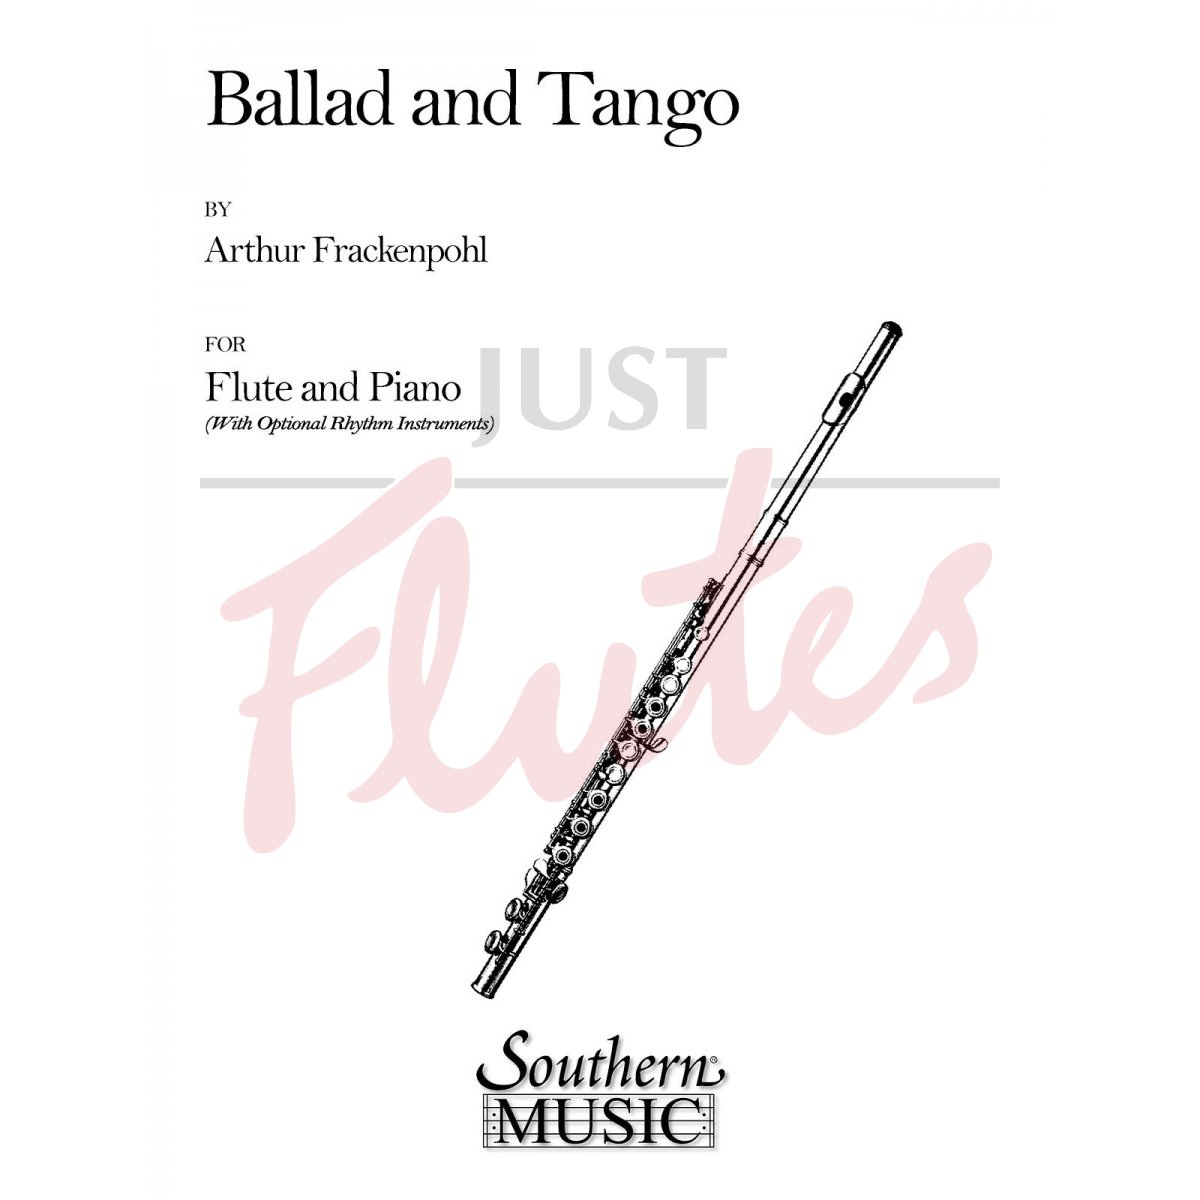 Ballad and Tango